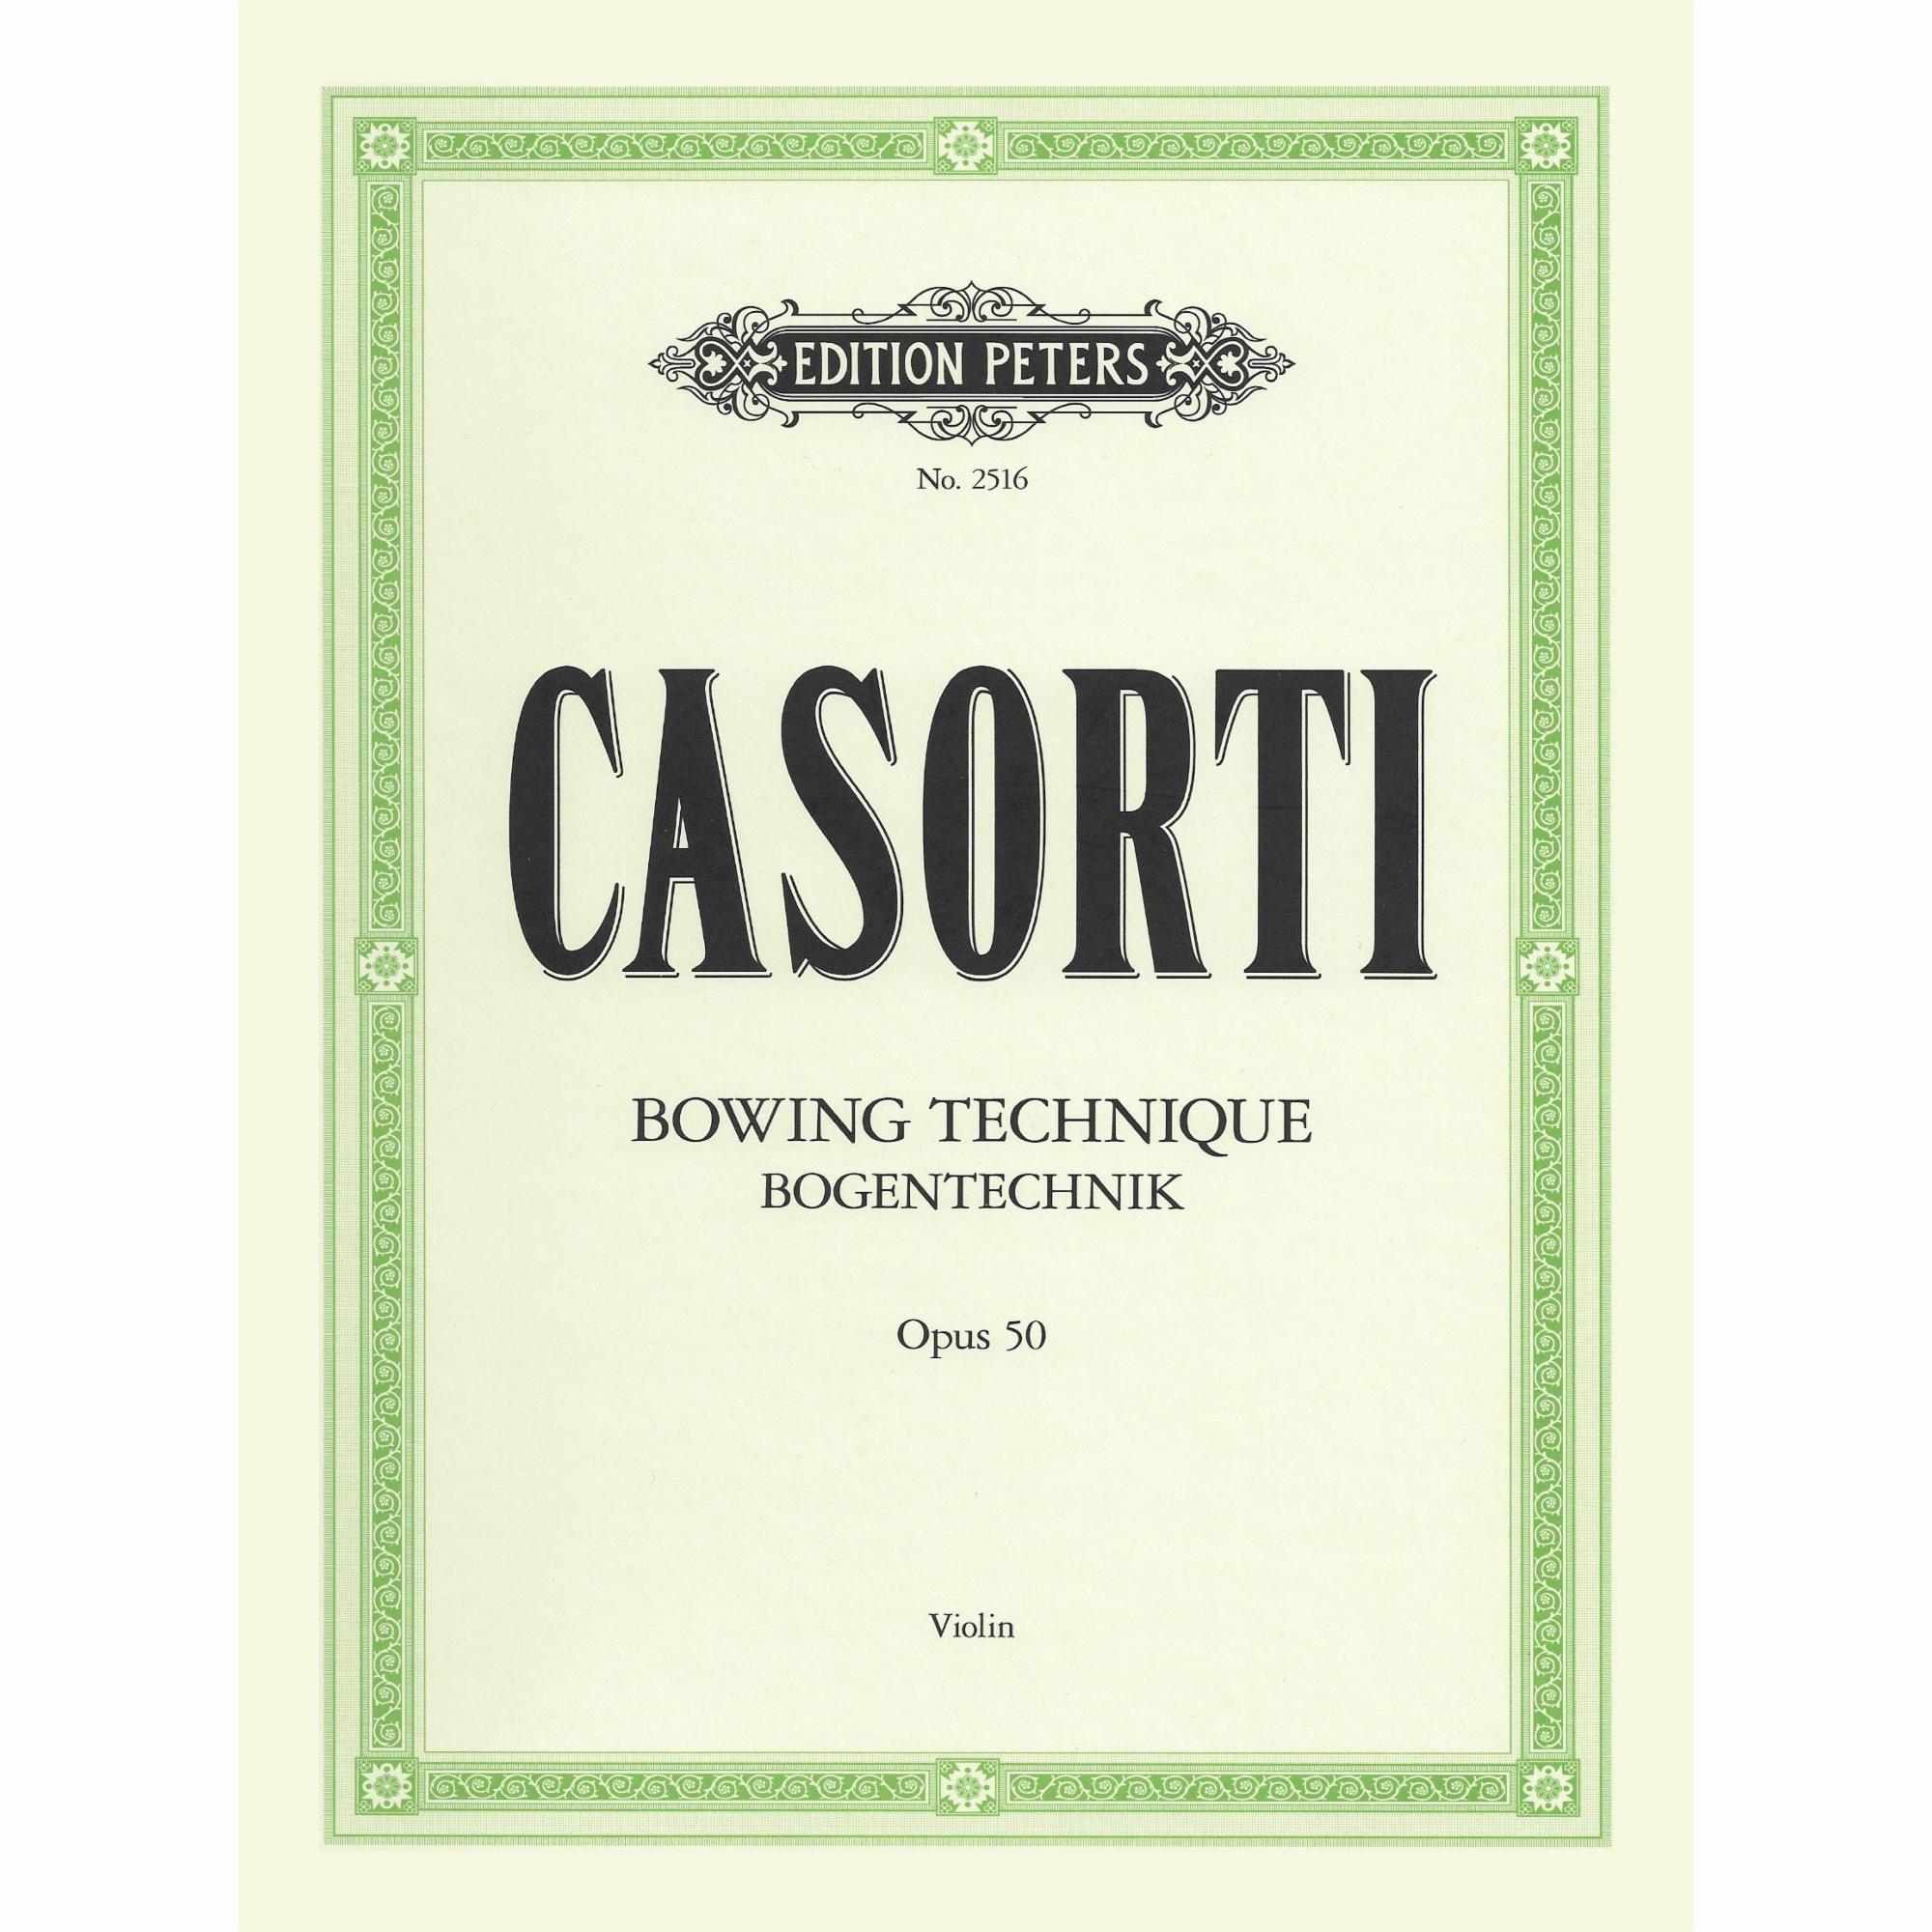 Casorti -- Bowing Technique, Op. 50 for Violin